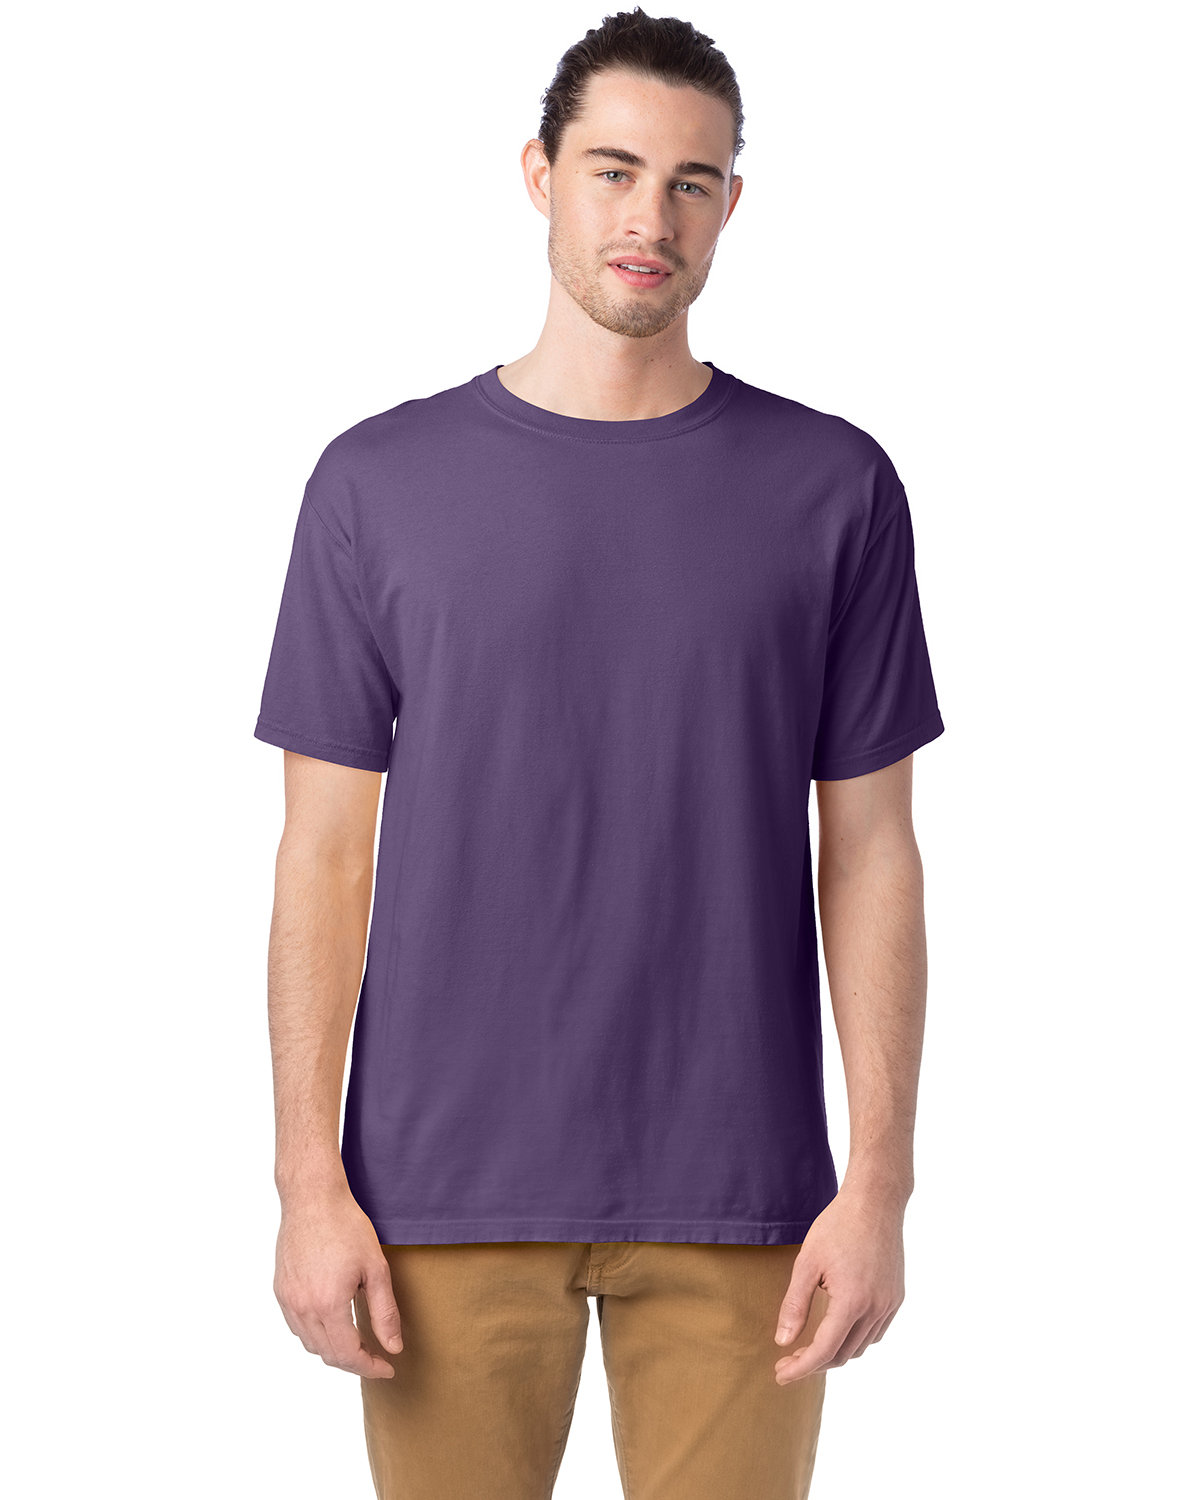 ComfortWash by Hanes Men's Garment-Dyed T-Shirt GRAPE SODA 